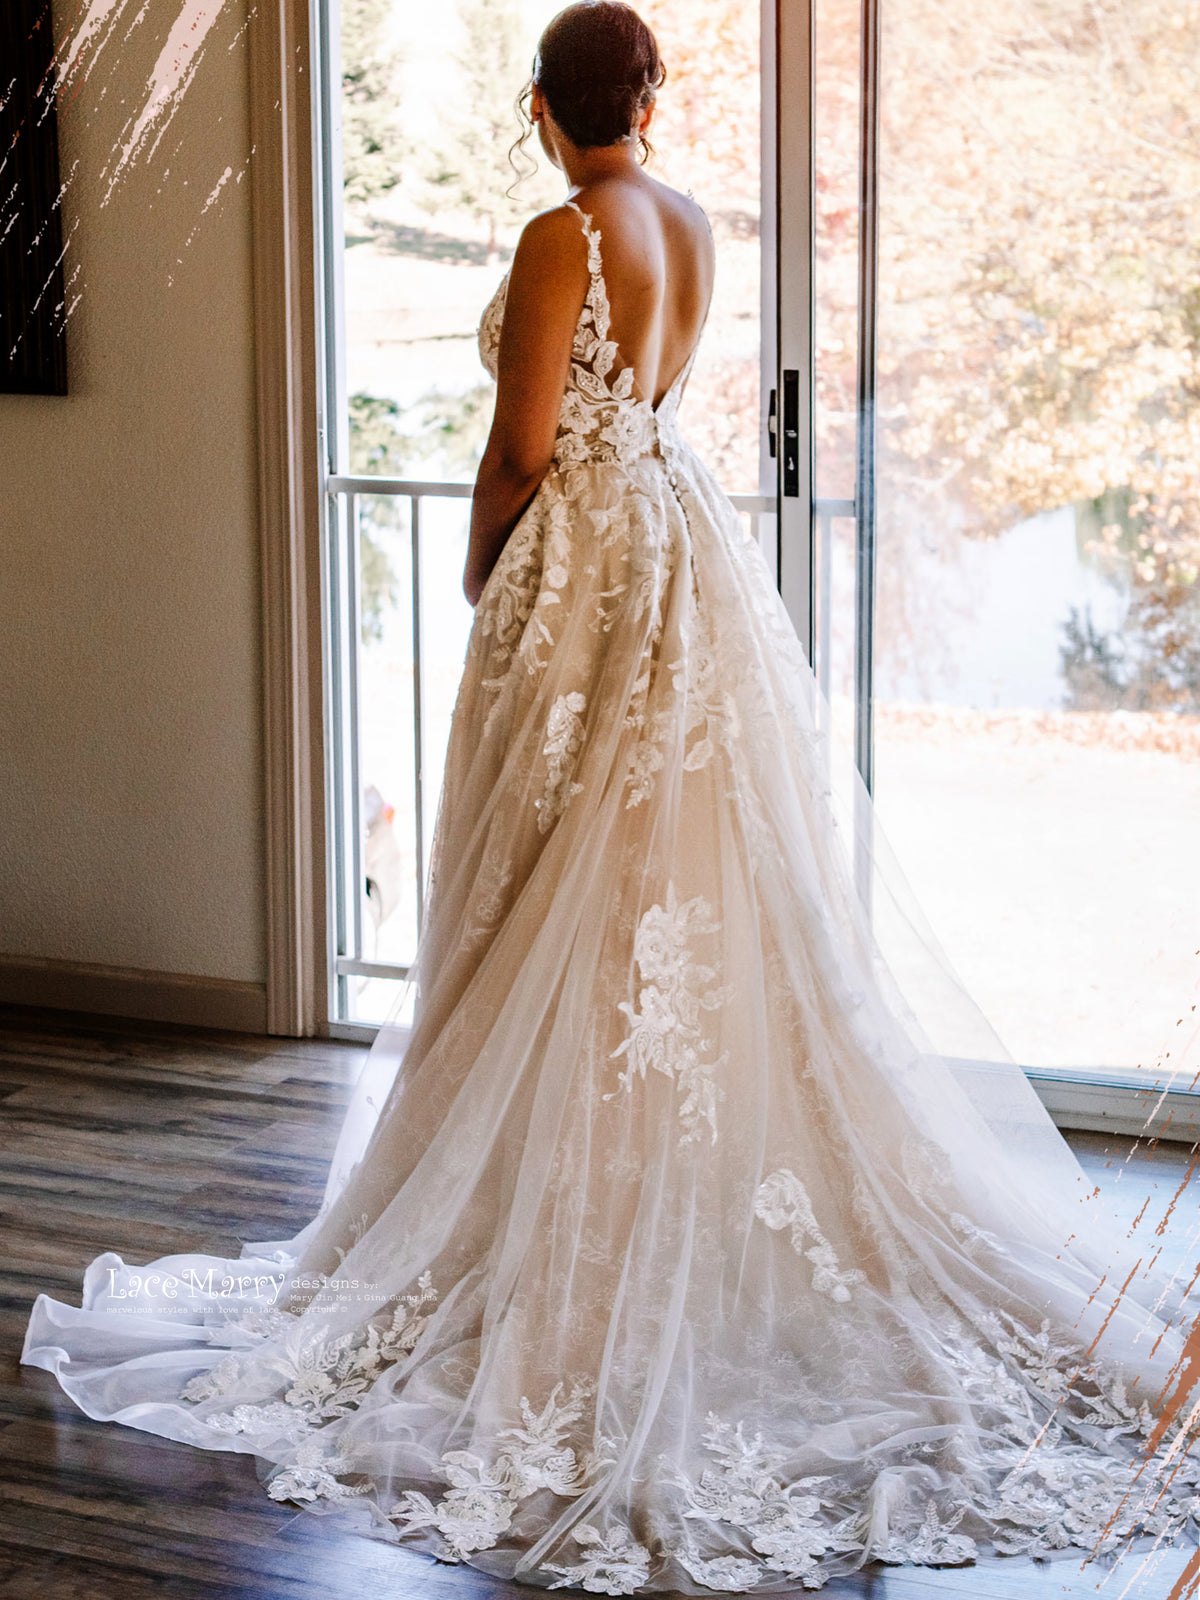 CELINE / Romantic A Line Wedding Dress with Gorgeous Lace Detail - LaceMarry